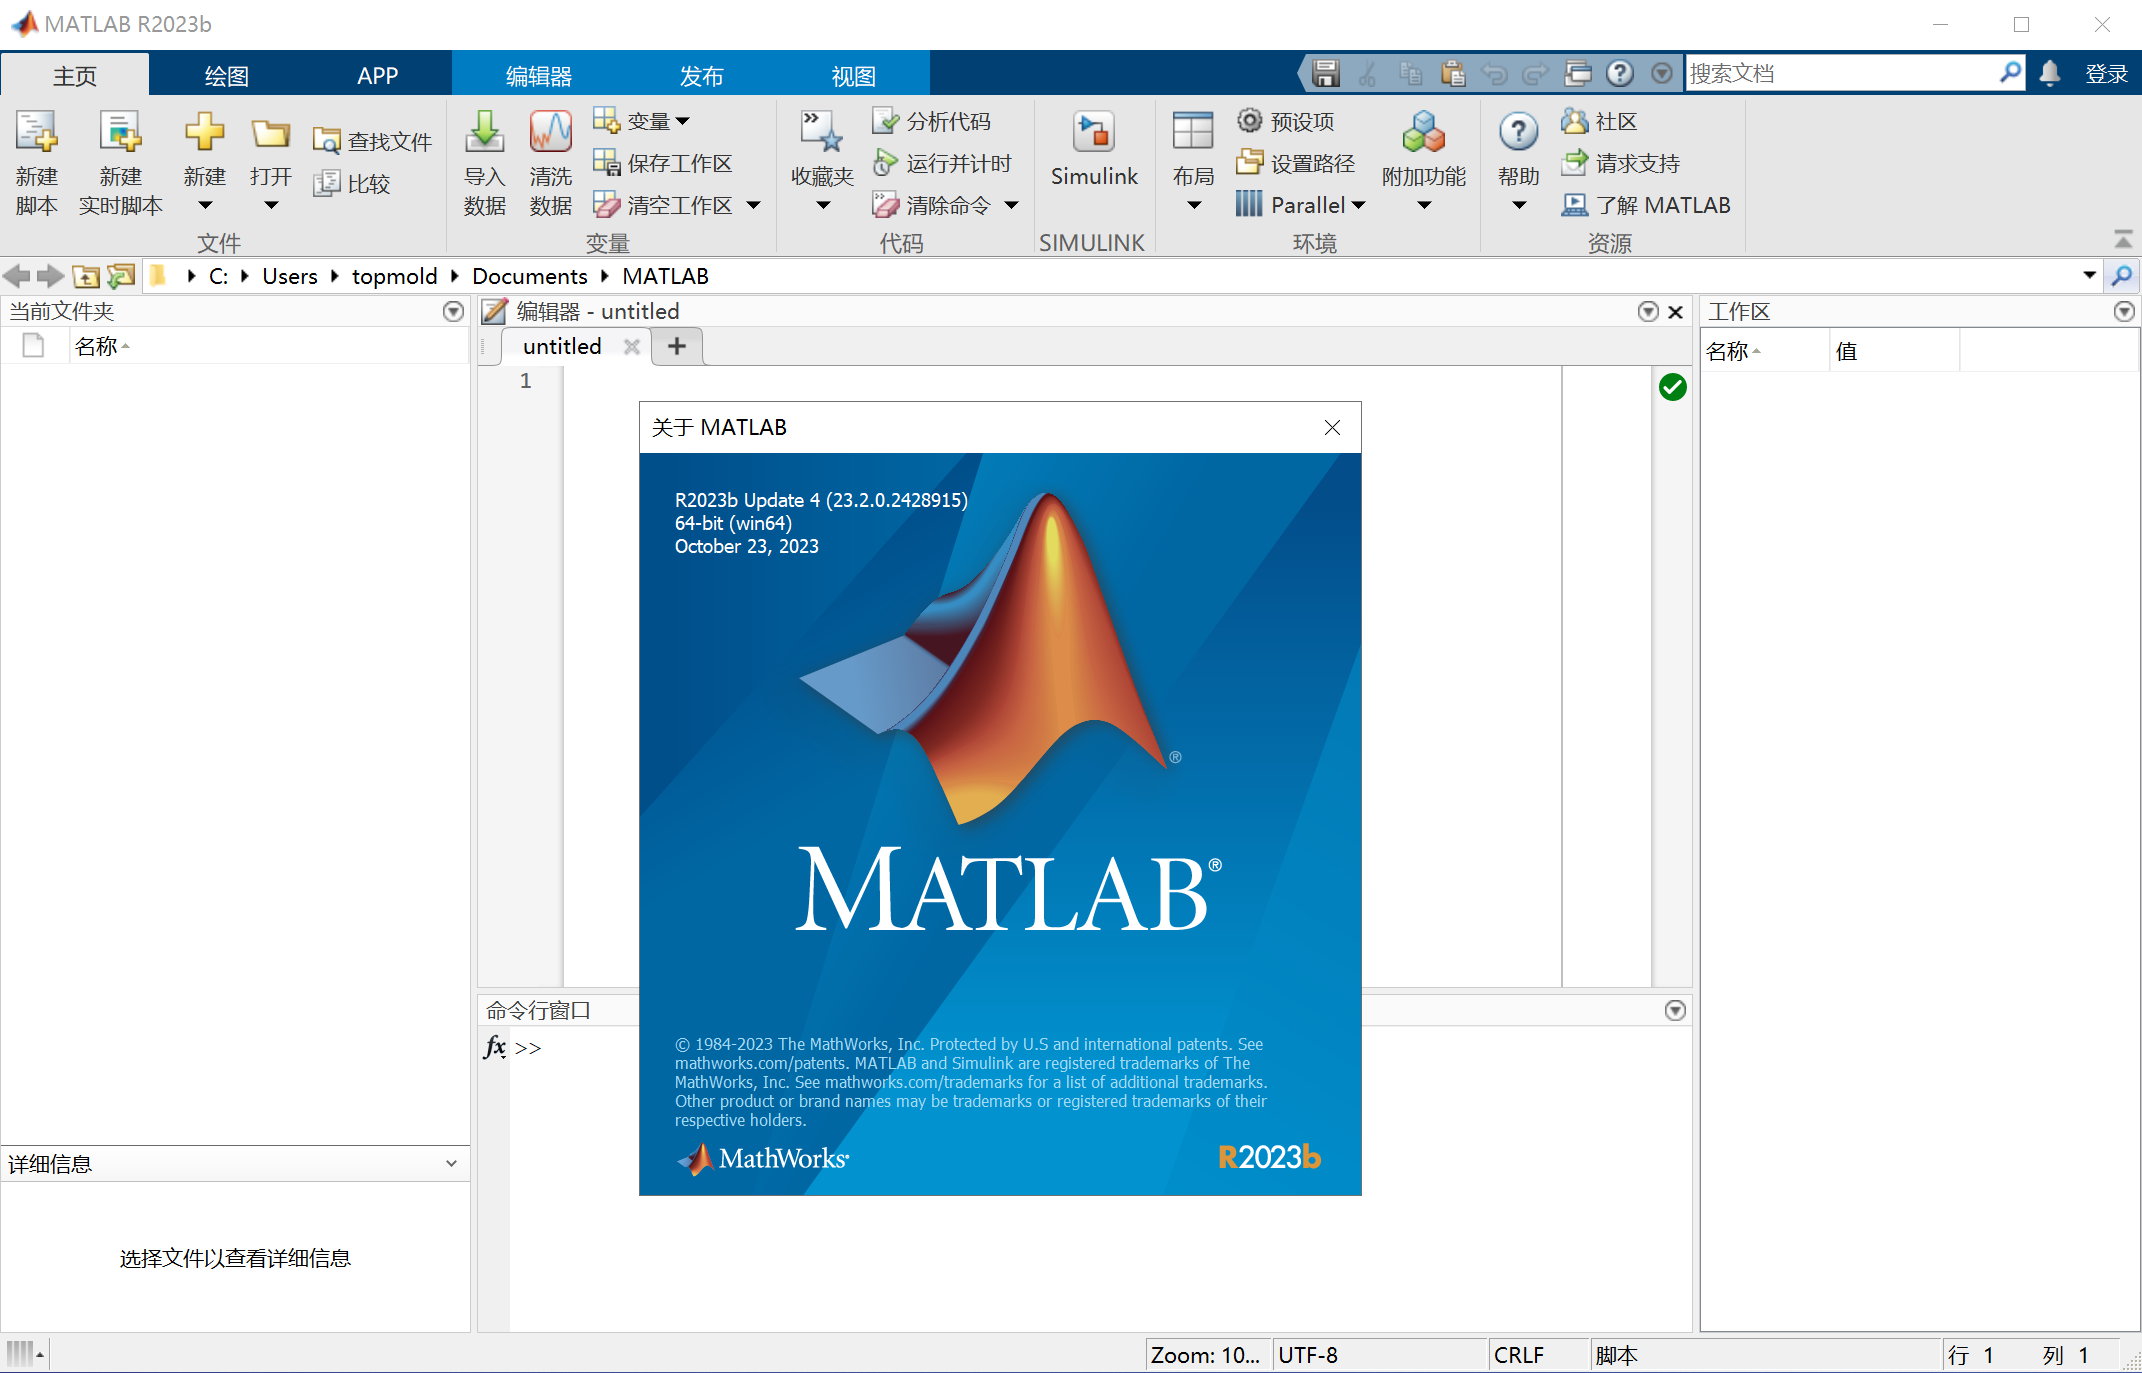 MathWorks MATLAB R2023b v23.2.0.2515942 Update 7 x64 Multilingual 中文注册版